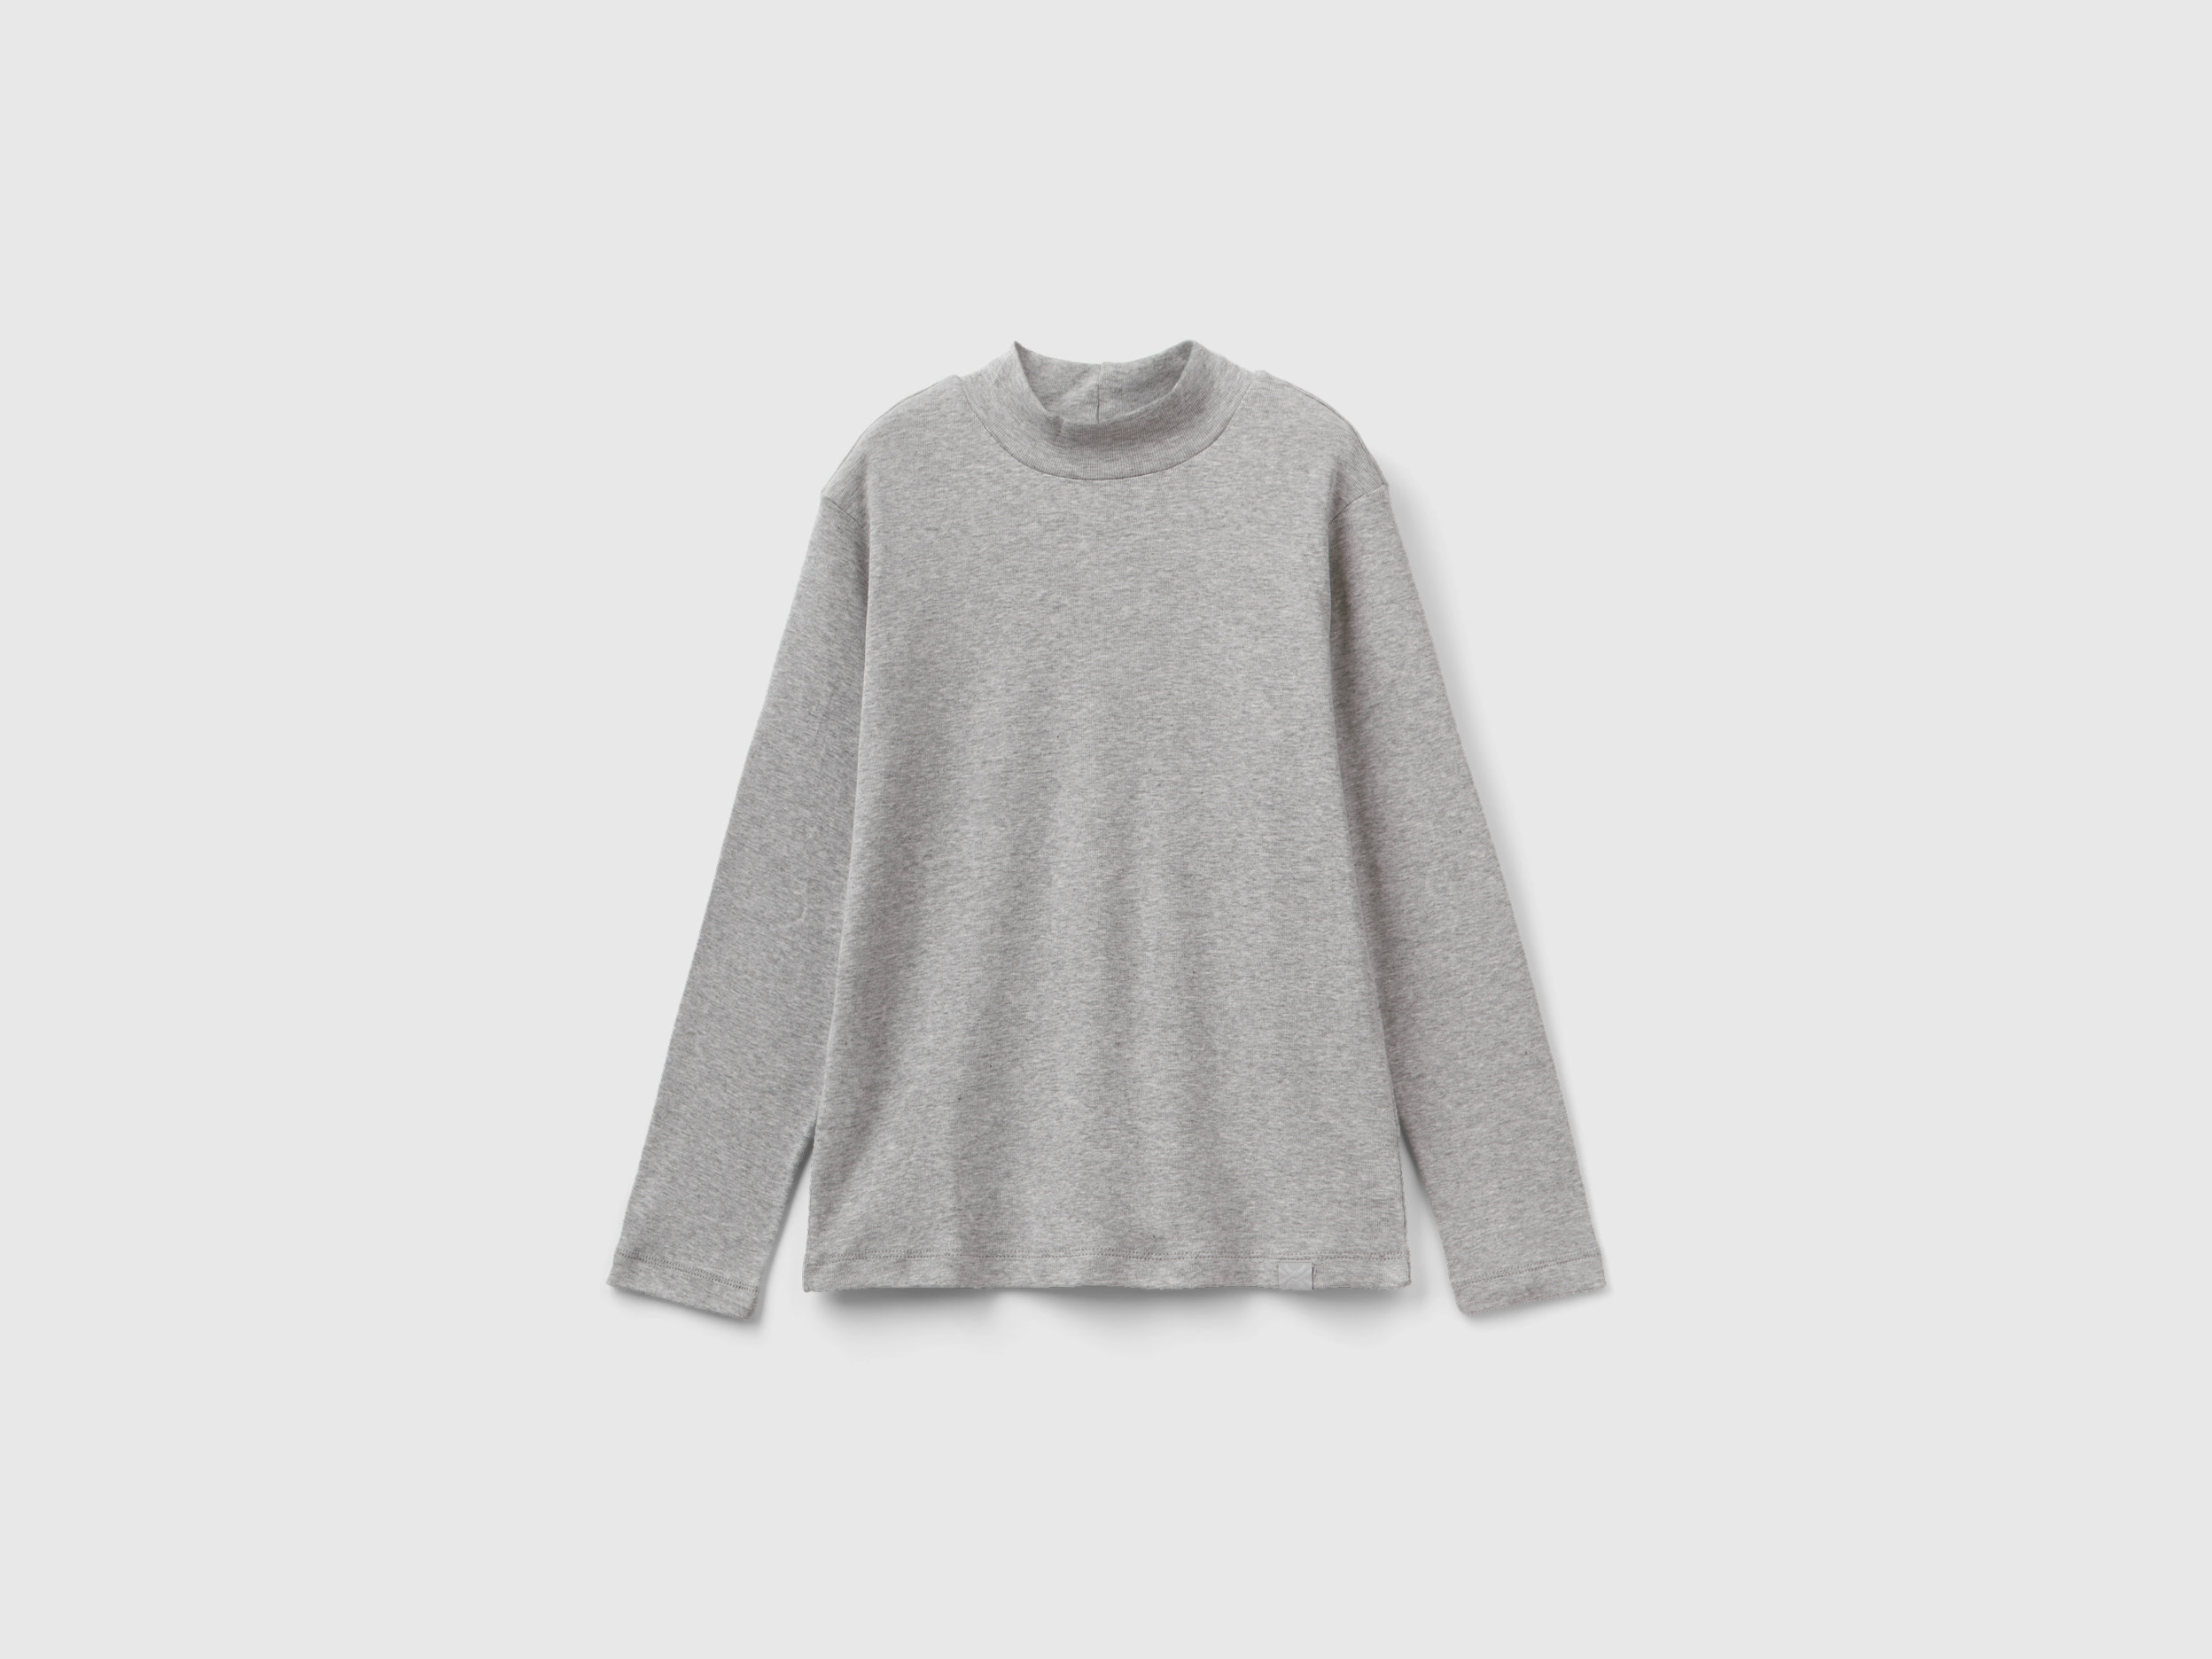 Benetton, Rubbed Knit Turtleneck T-shirt, size L, Gray, Kids